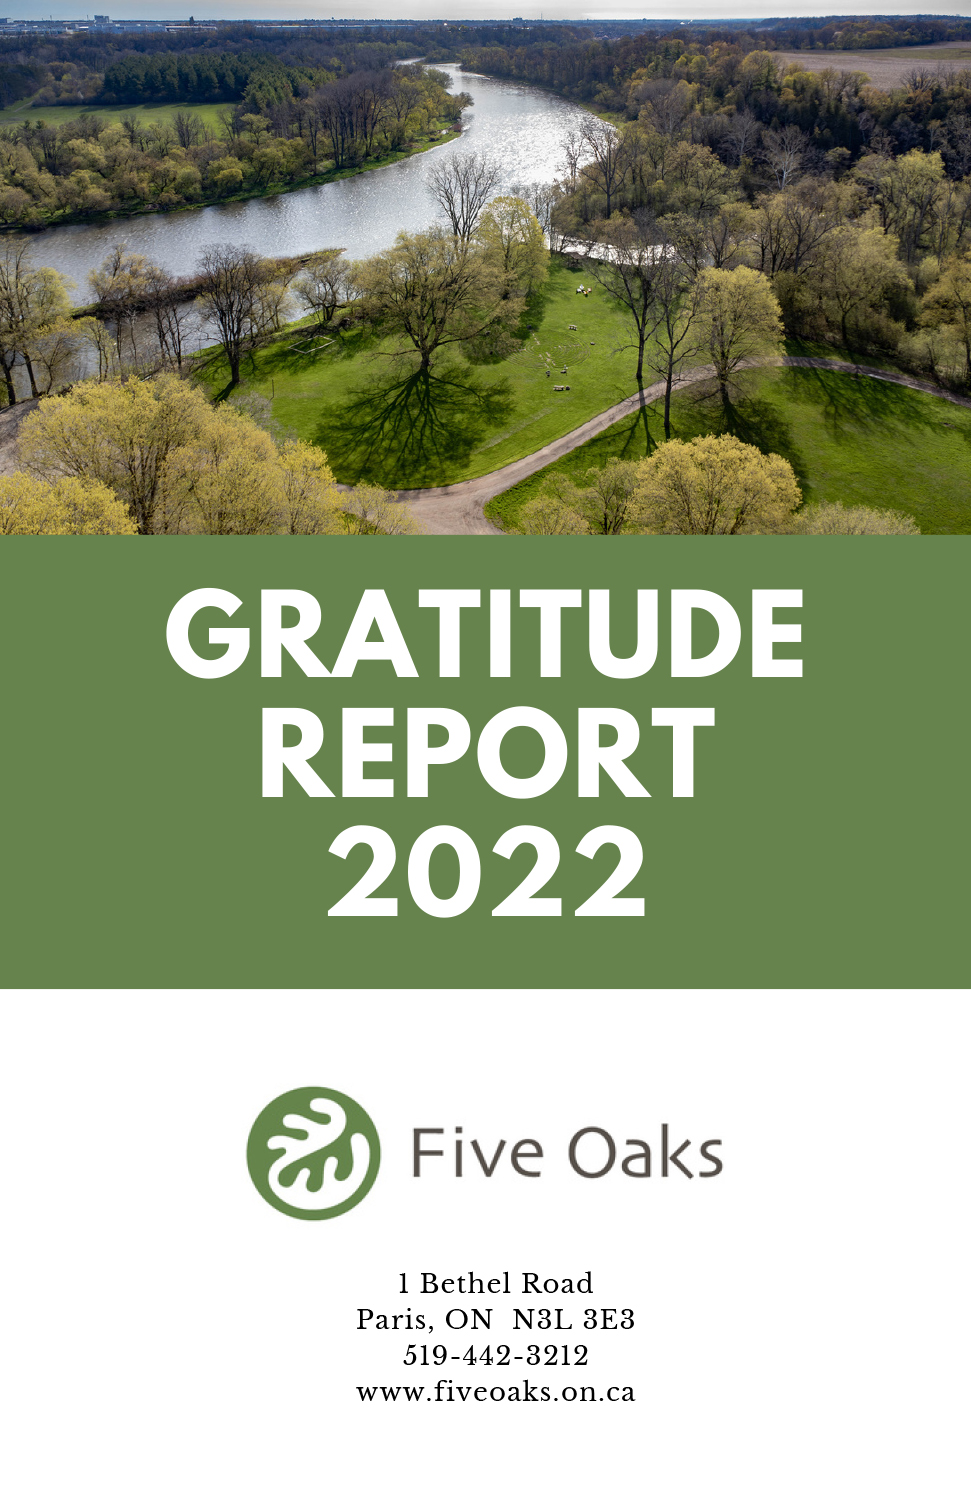 Gratitude Report 2022